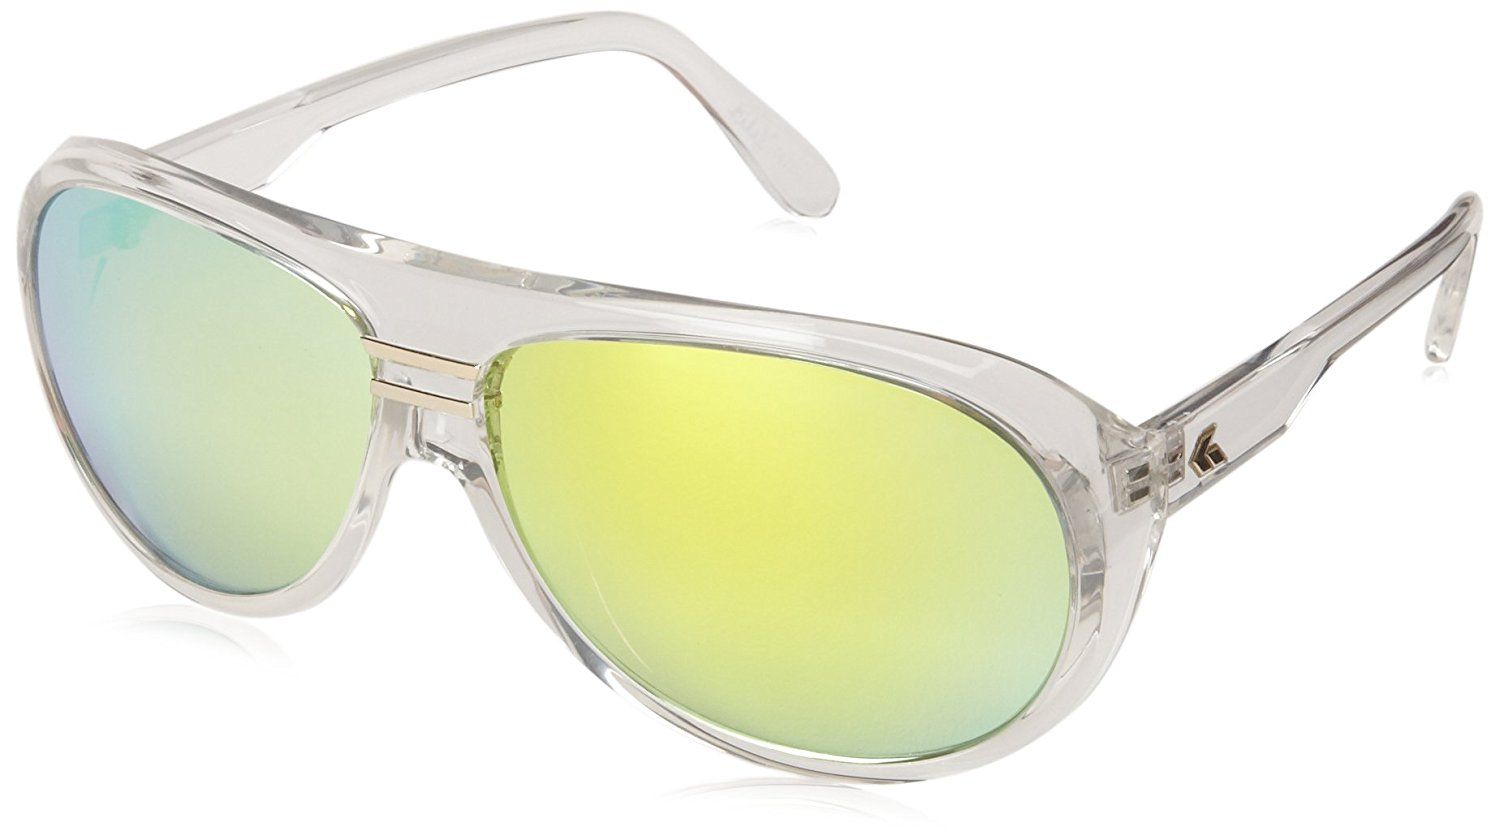 Gatorz ELYCLR12C Iridium Round Sunglasses